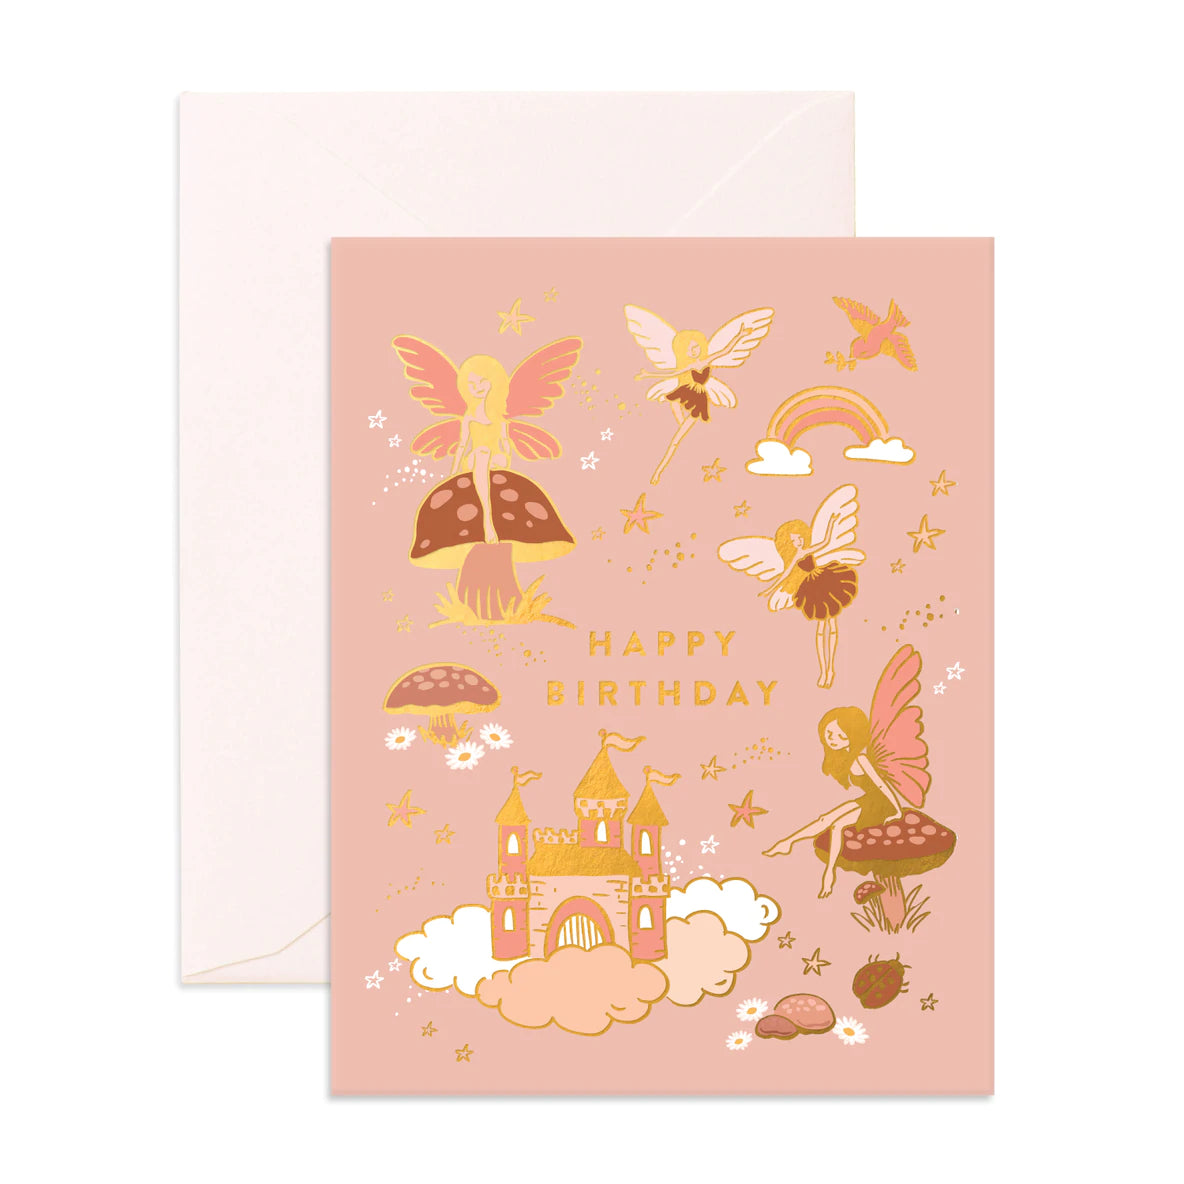 Fox and Fallow Greetings Card - Happy Birthday (Fairies)